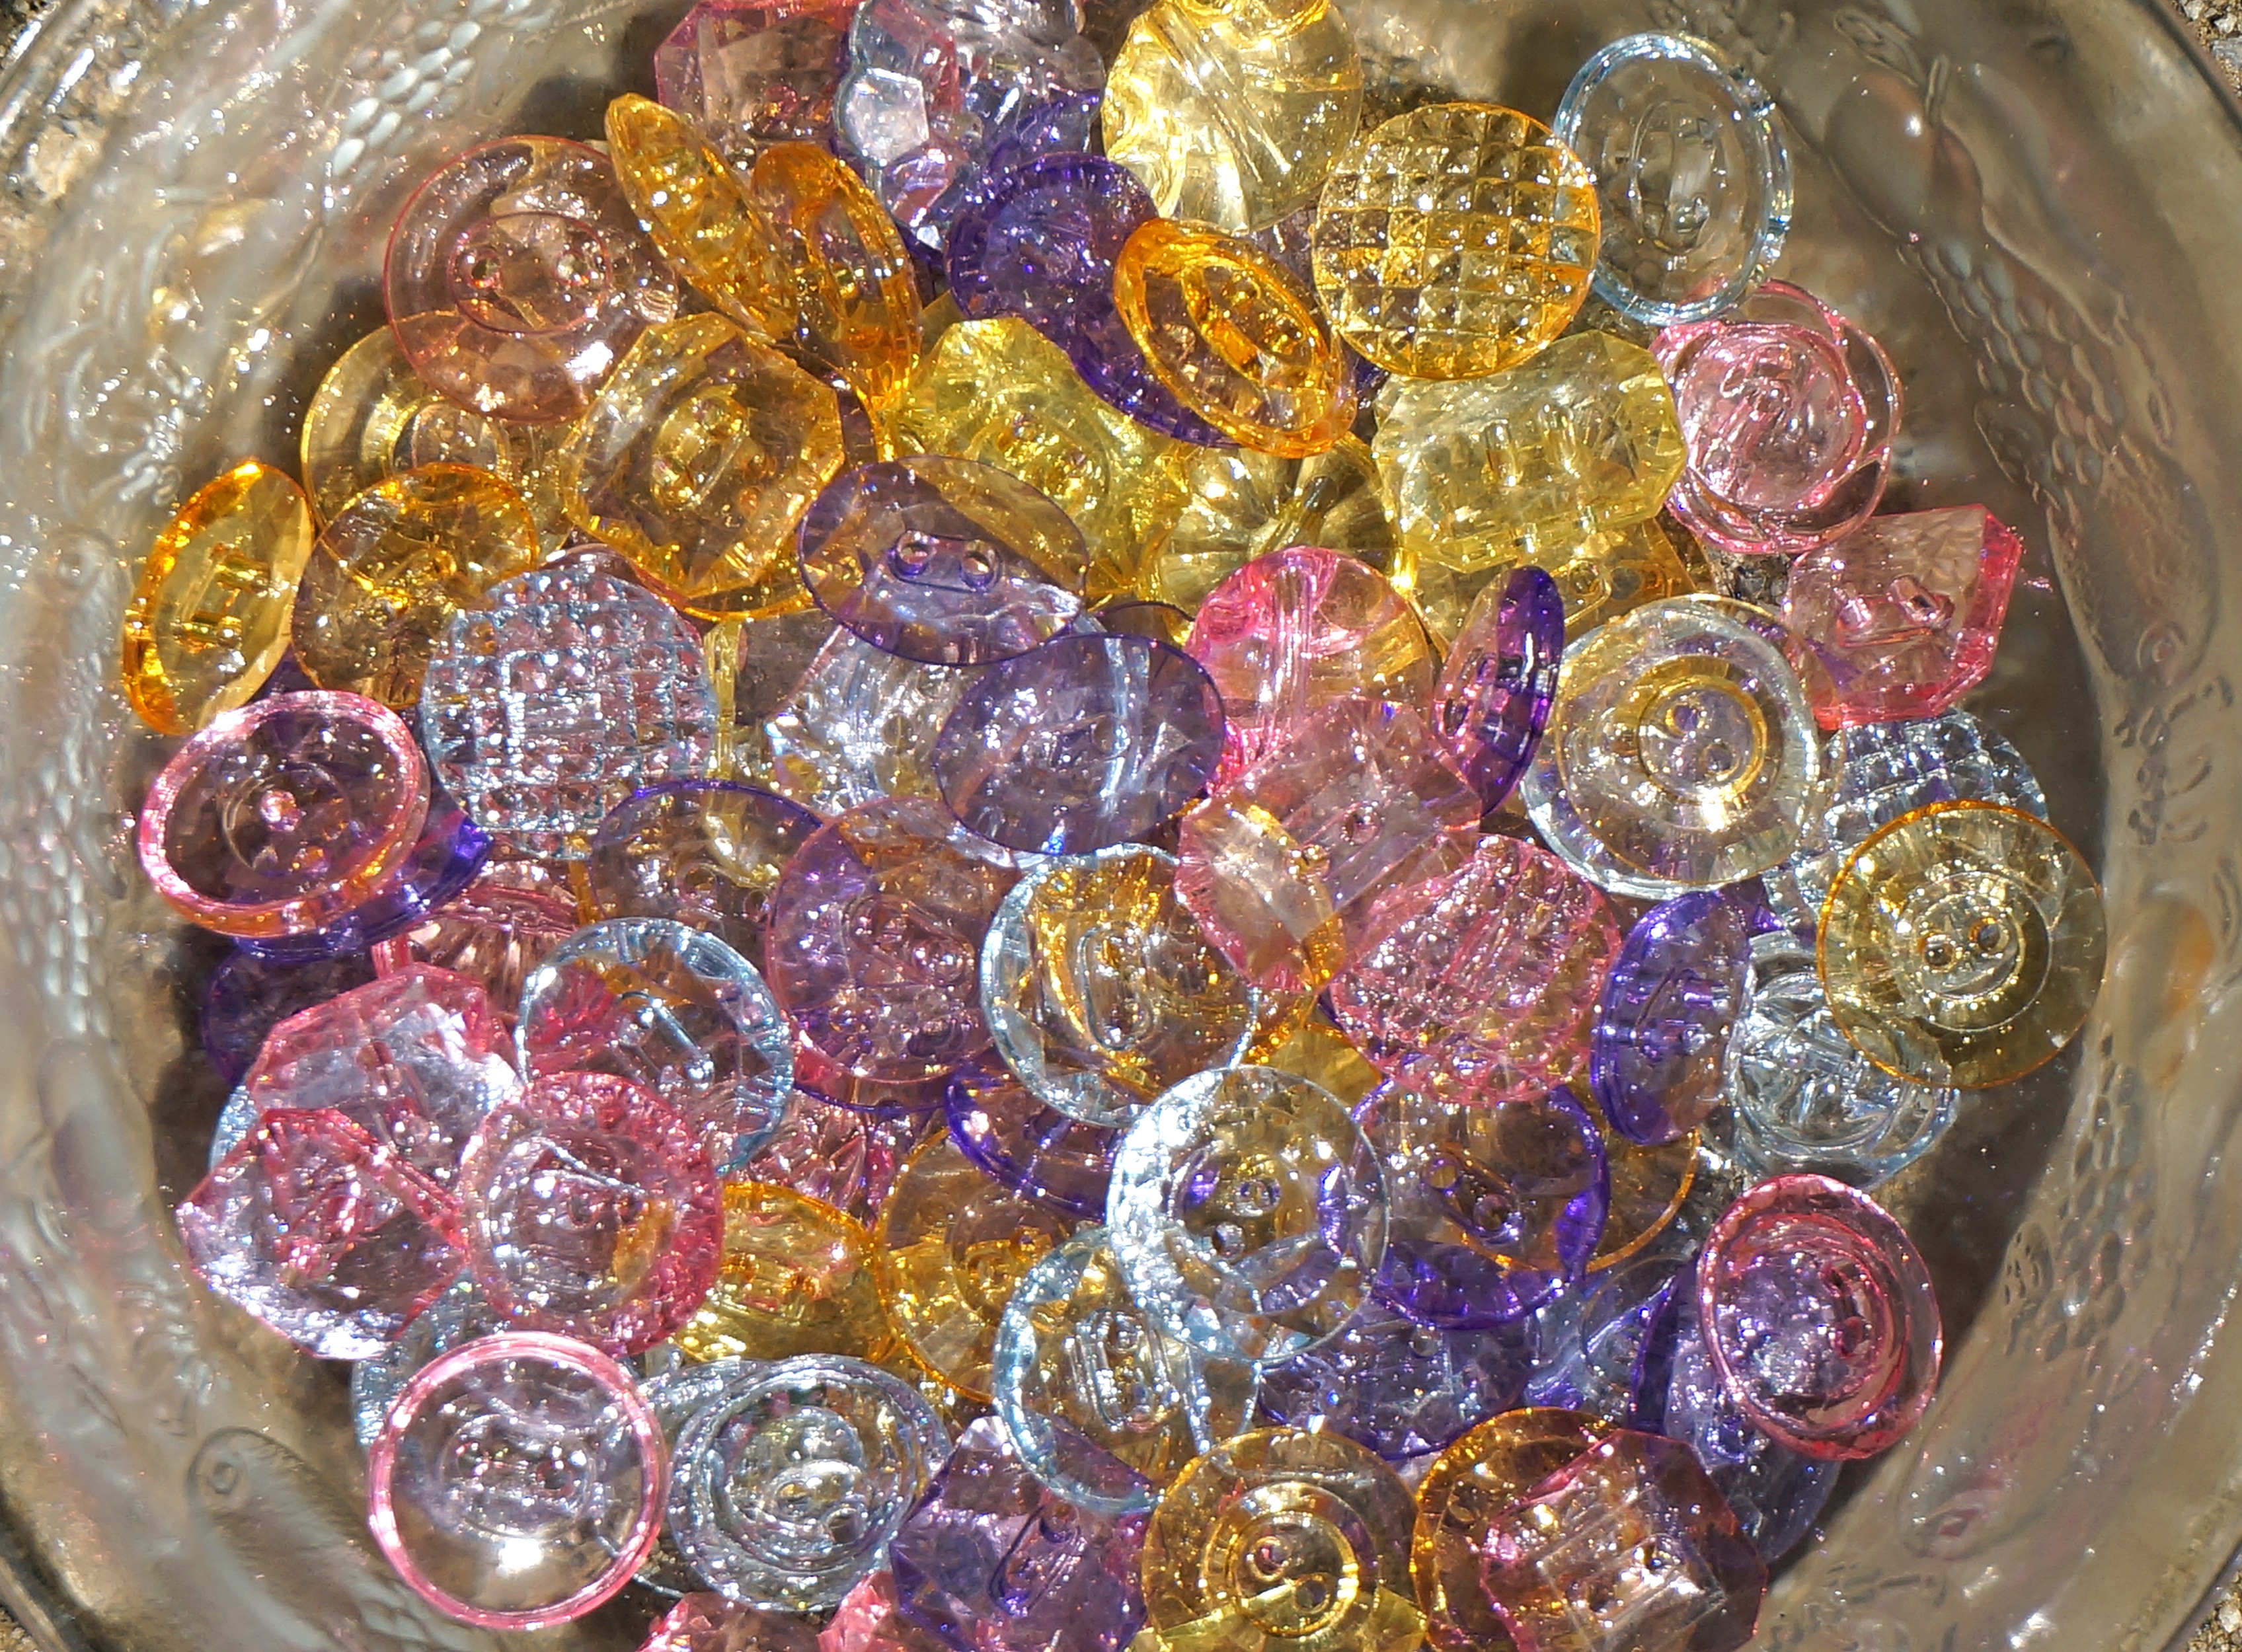 gemstones in clear glass vase